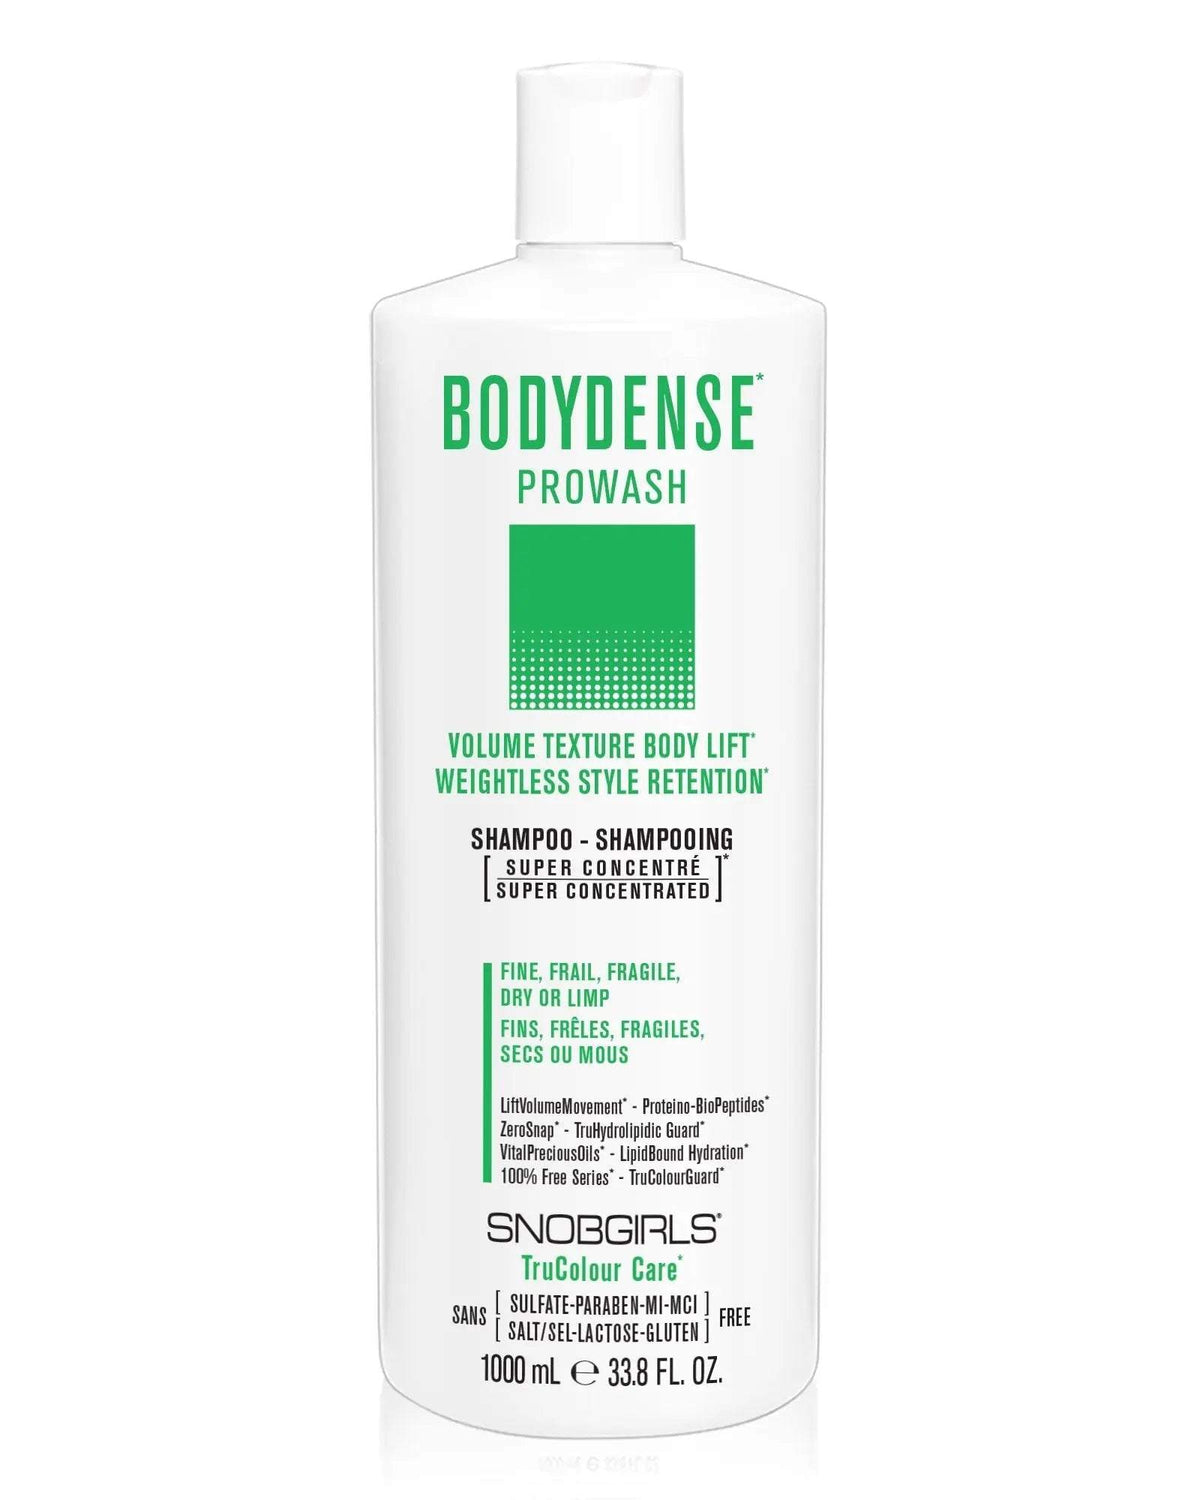 BODYDENSE Prowash (shampoo) 1000 mL - SNOBGIRLS Canada